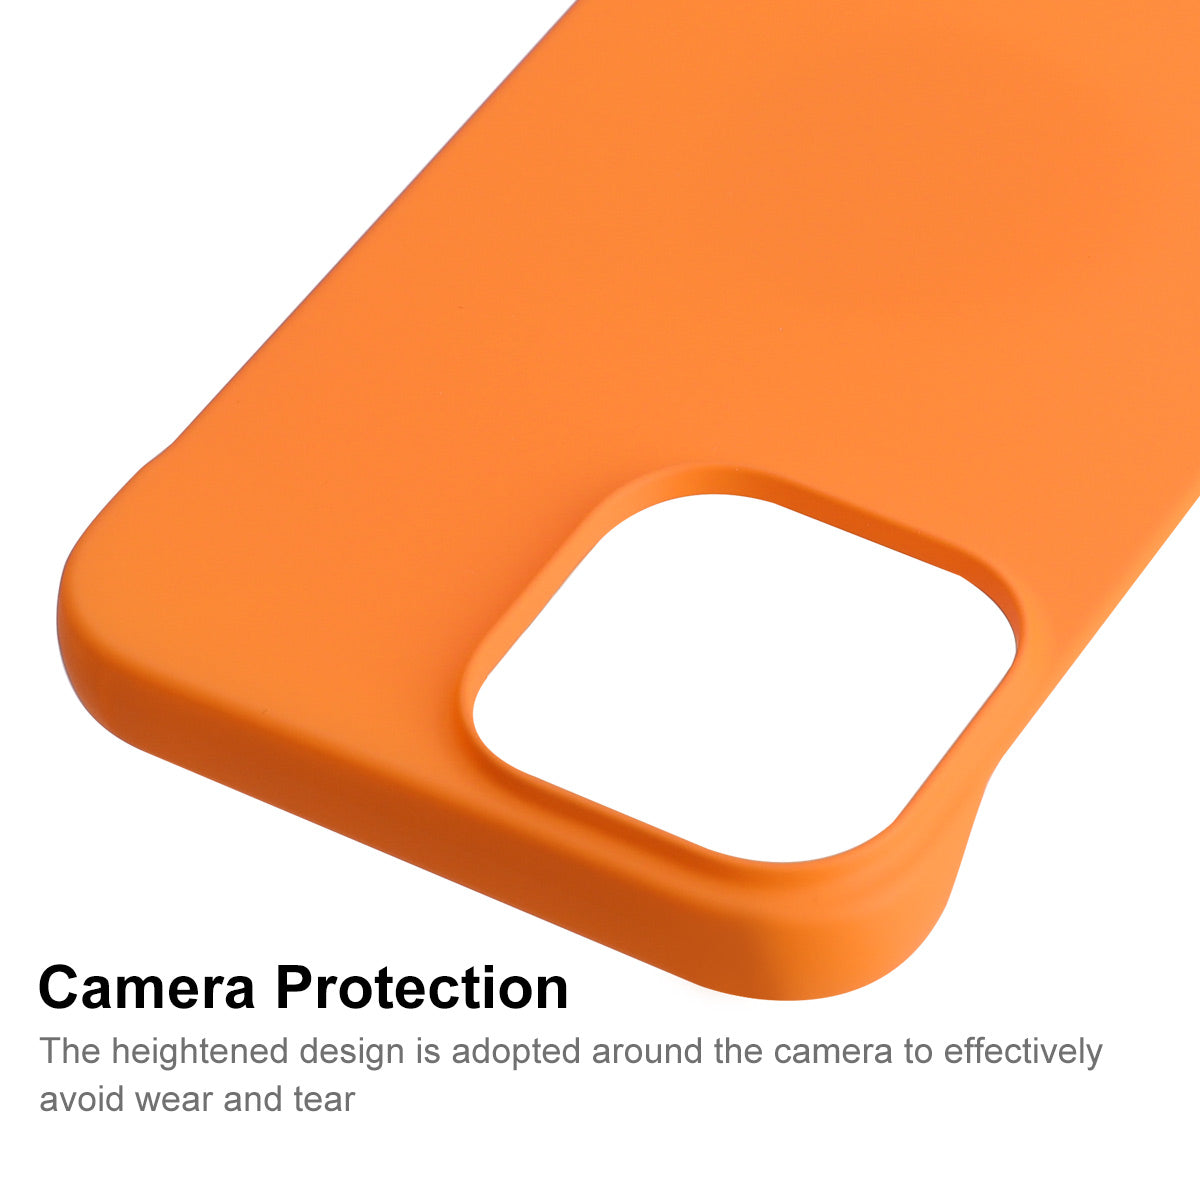 Uniqkart For iPhone 15 Pro Max Rubberized Matte Hard PC Phone Case Frameless Back Cover - Blackish Green